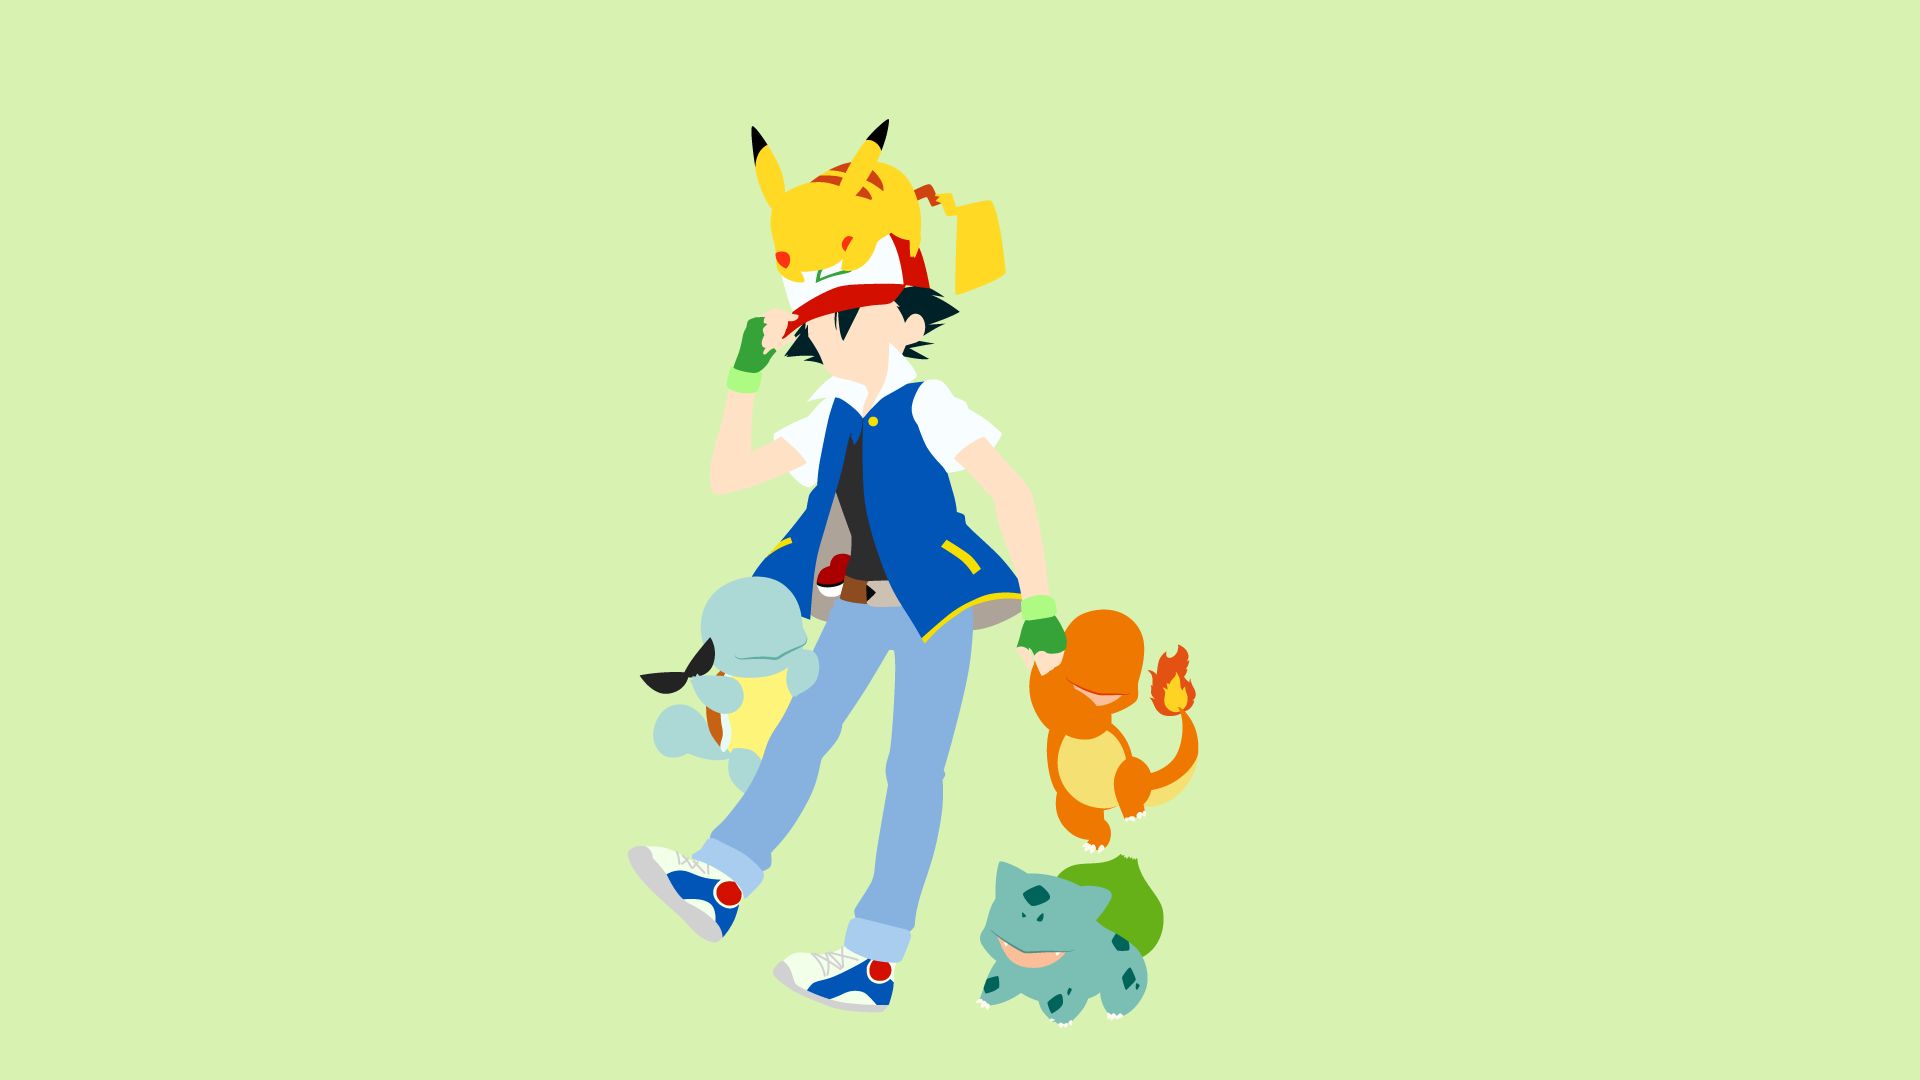 Baixar papel de parede para celular de Anime, Pokémon, Minimalista, Pikachu, Bulbasaur (Pokémon), Charmander (Pokémon), Squirtle (Pokémon), Ash Ketchum gratuito.